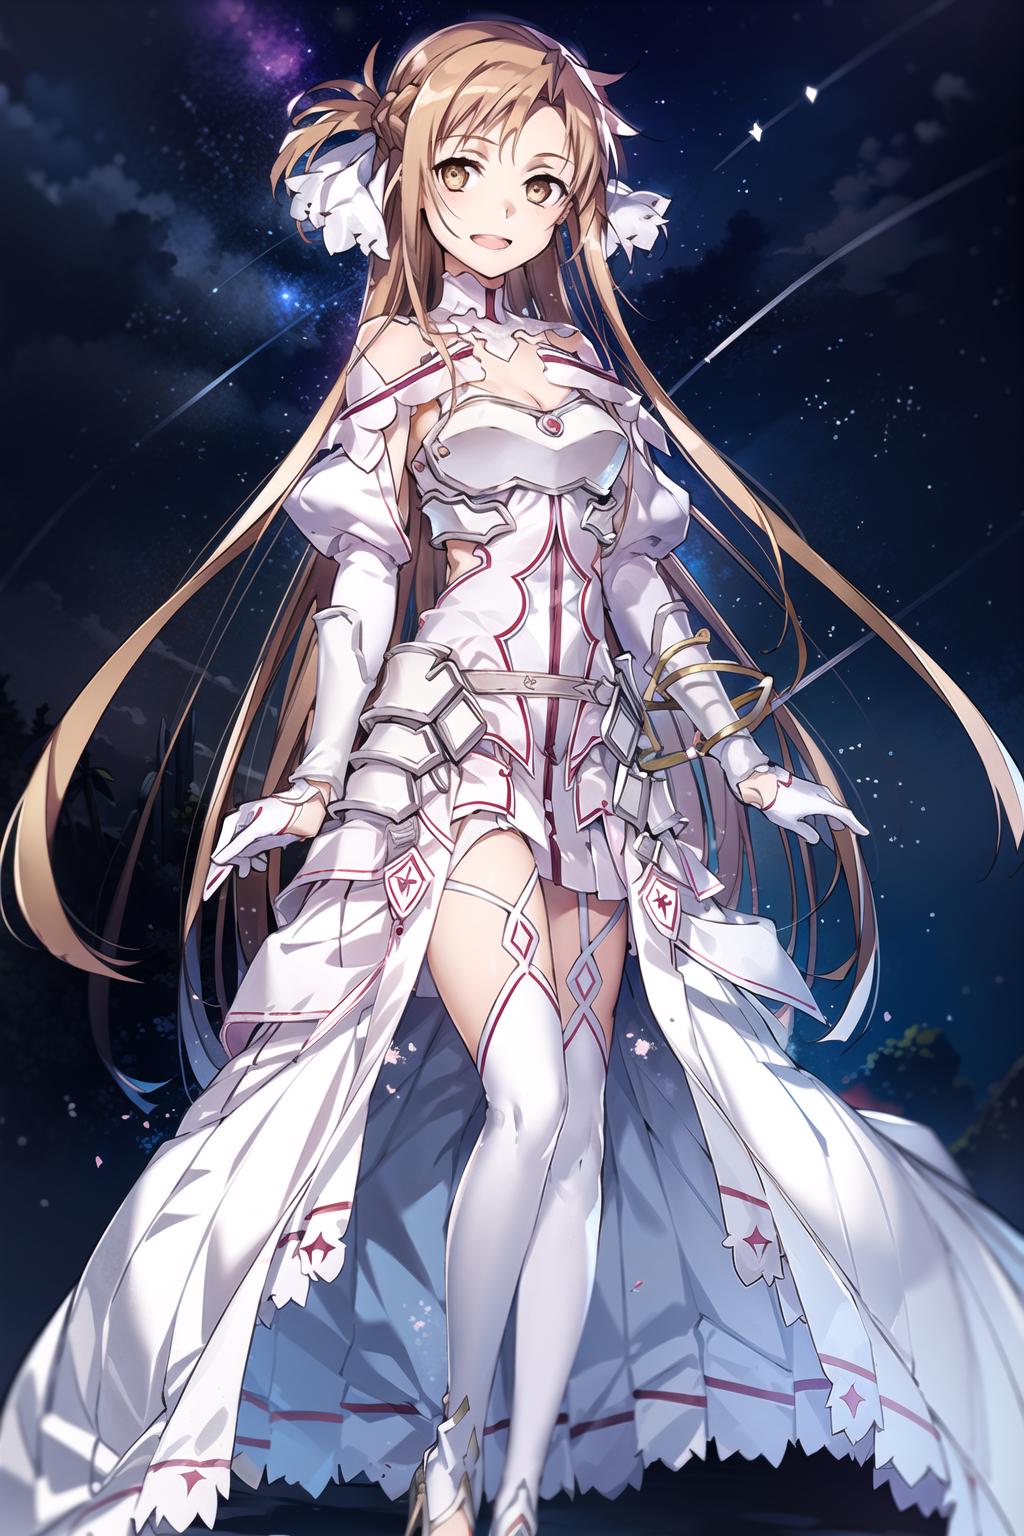 [LoRA] Stacia - Goddess of Creation | Asuna | Underworld | SAO image by L115A4